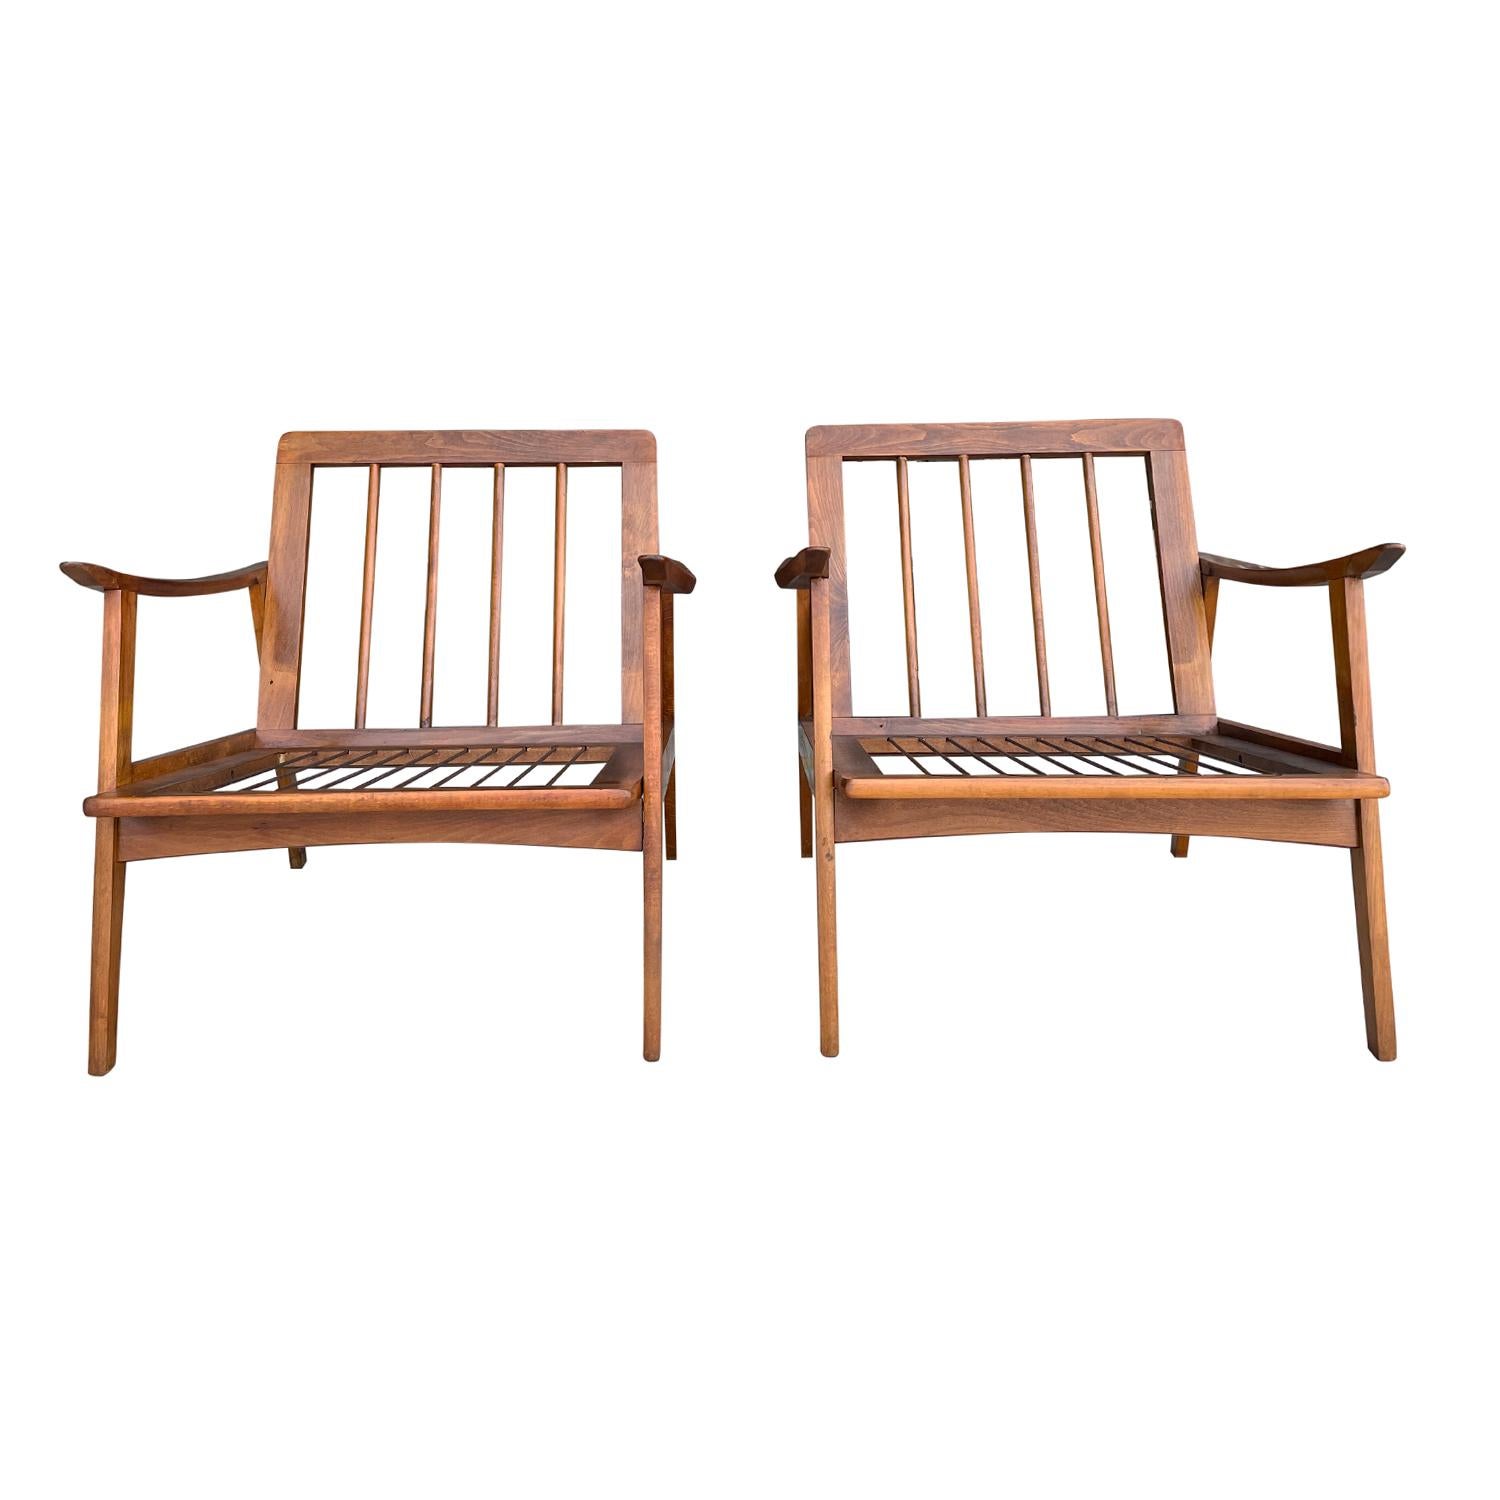 20th Century Danish Vintage Modern Pair of Open Teak Chairs by Kai Kristiansen For Sale 7